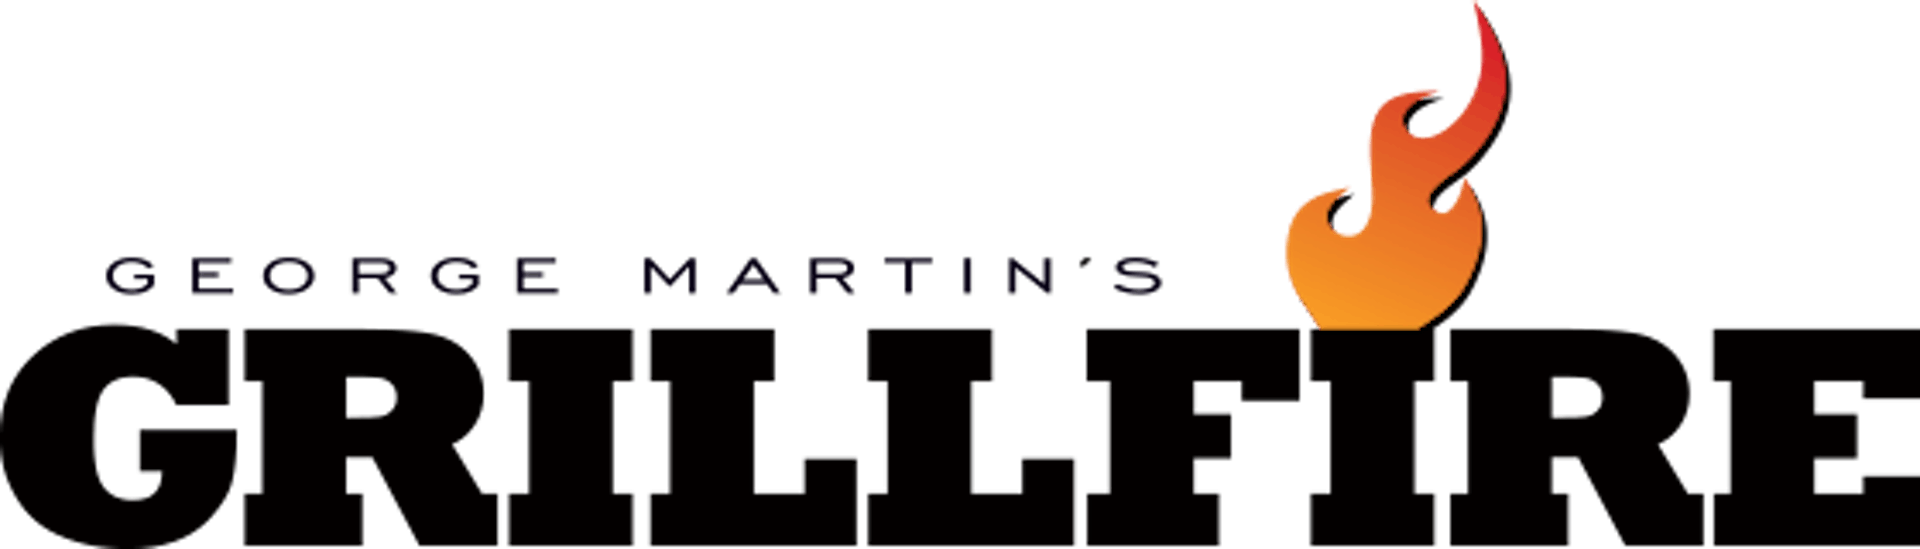 George Martin's Grillfire